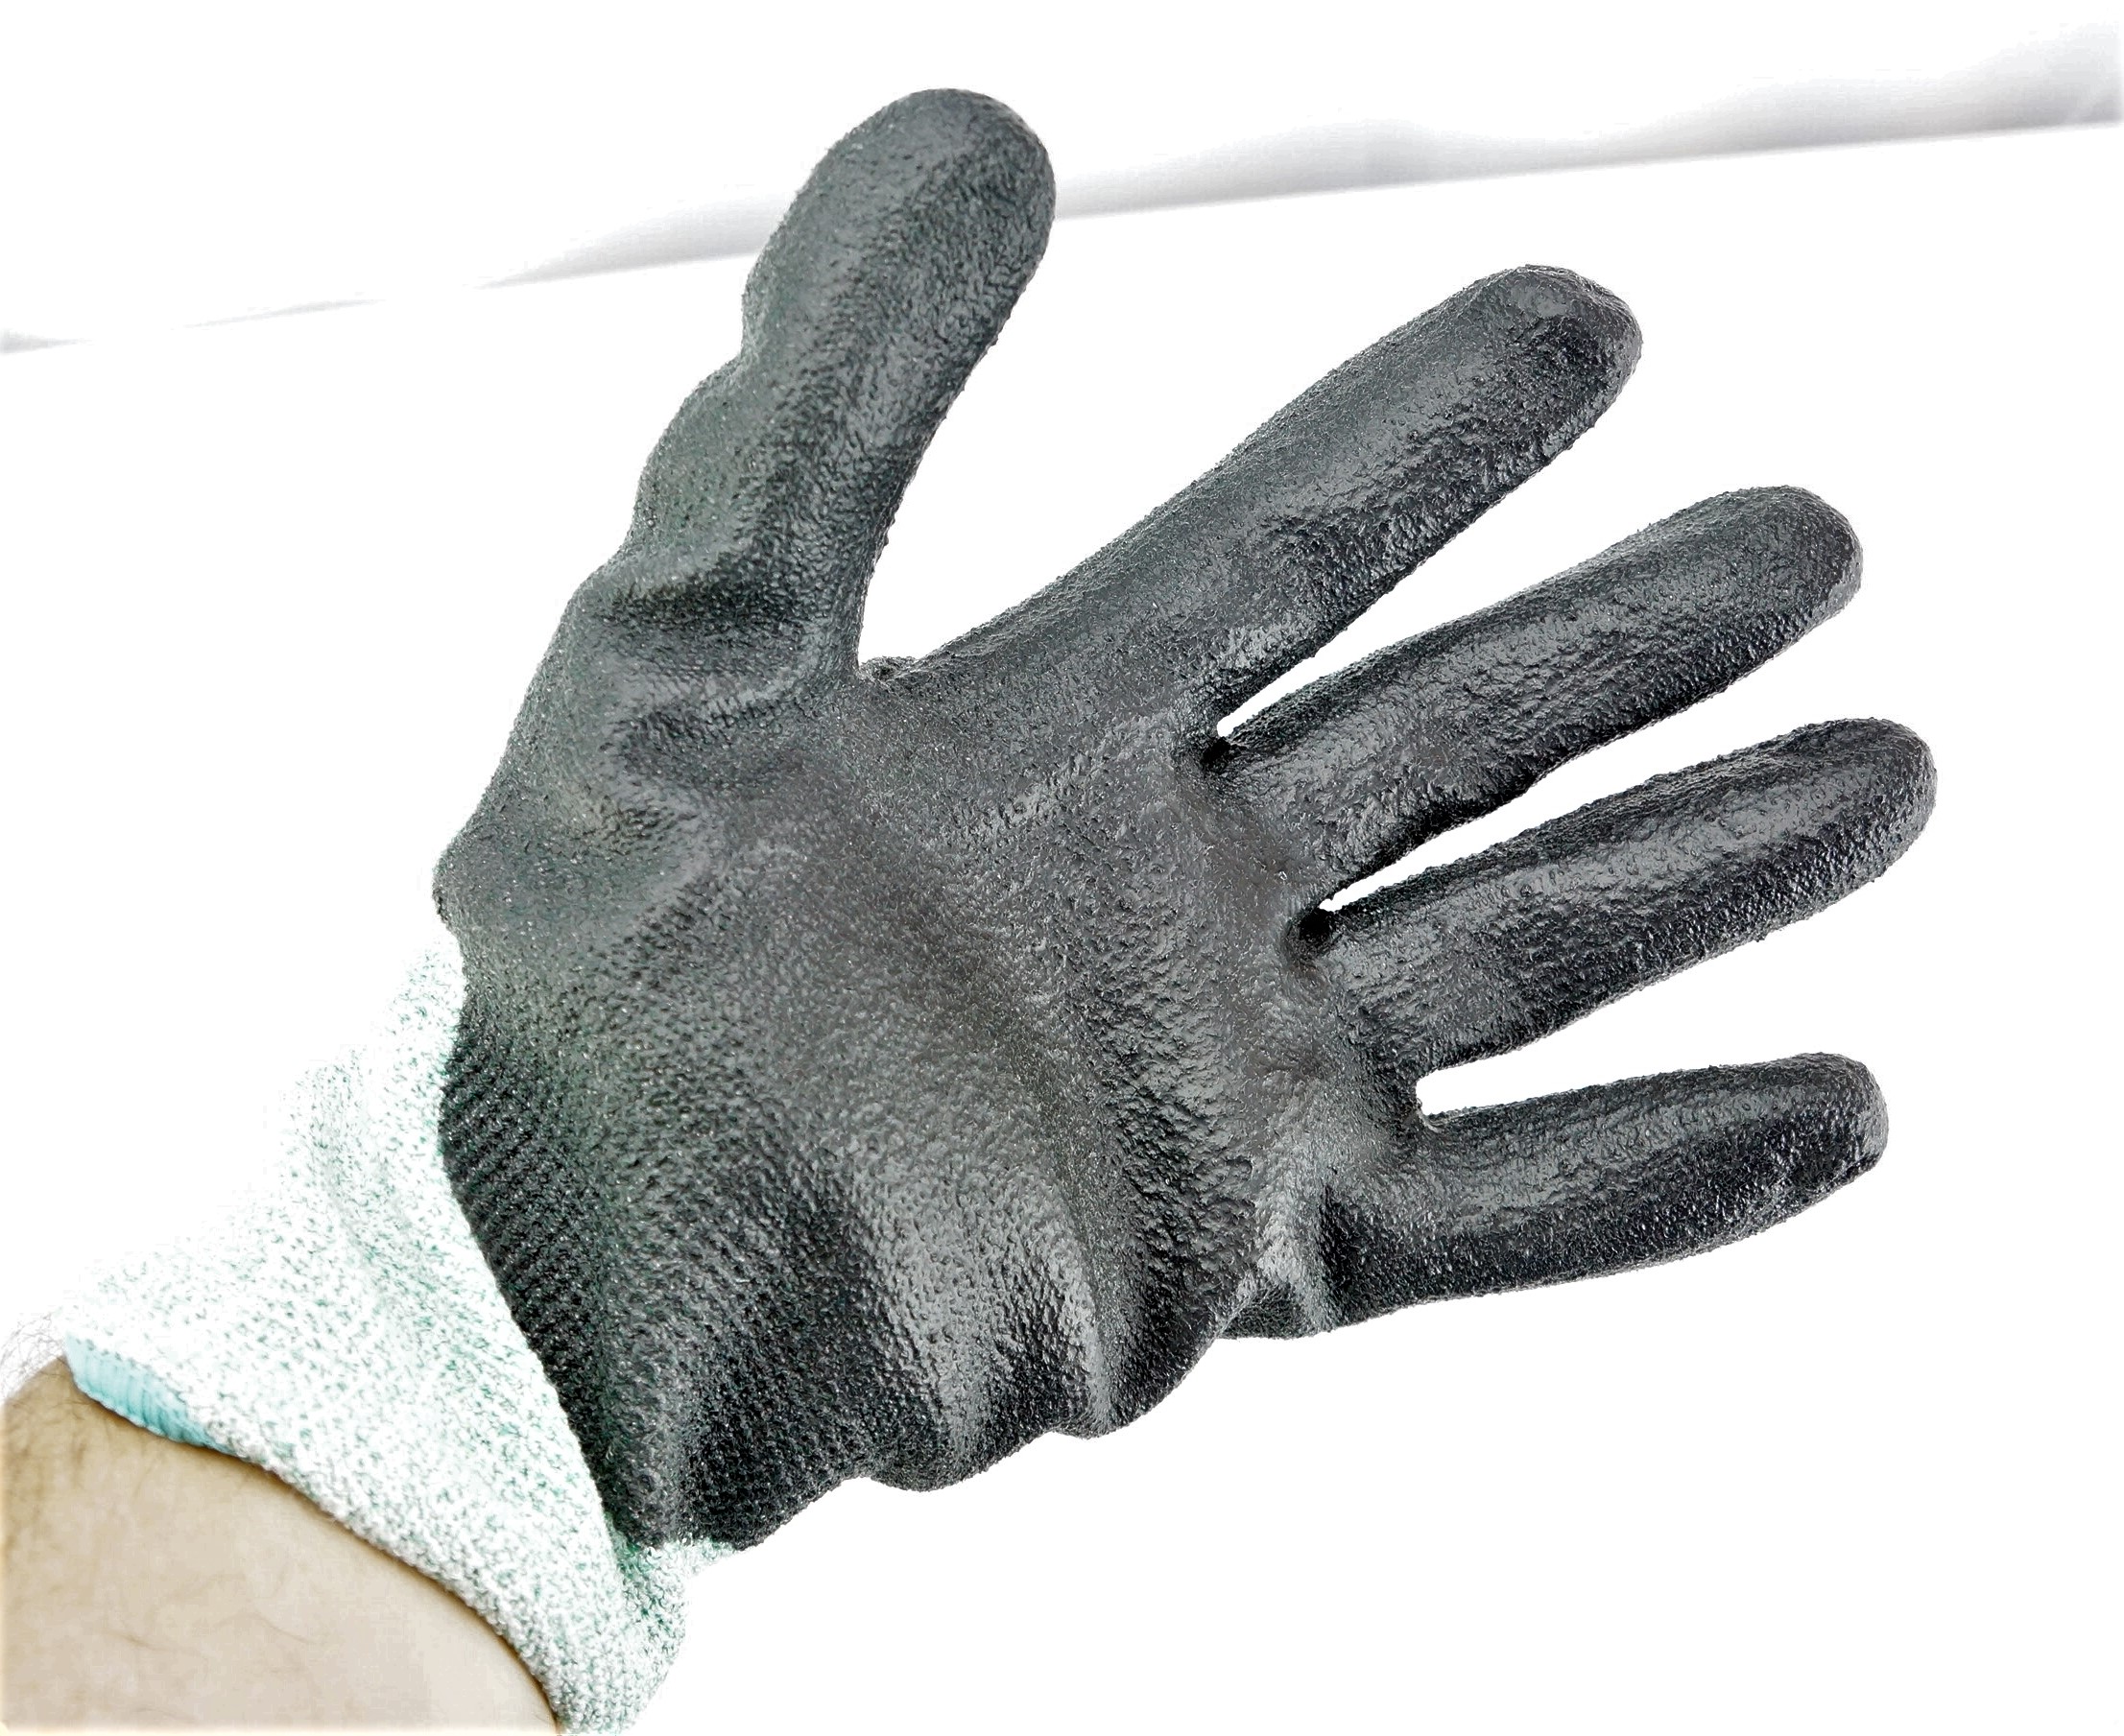 Pair 02-014-XXL Armor Guys Excel Industrial Work Glove Polyurethane Palm XXLarge